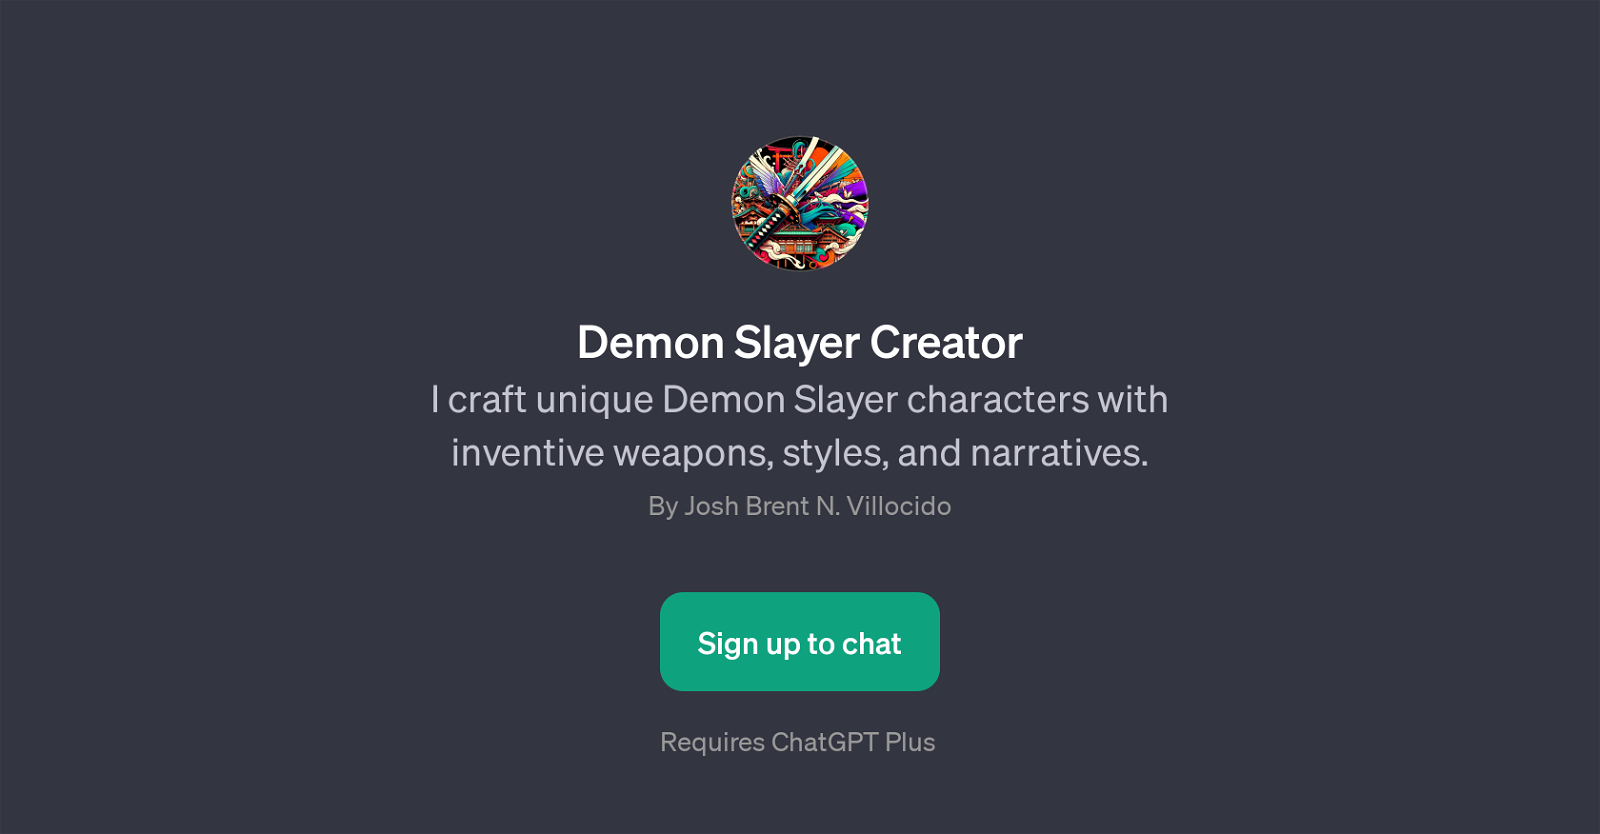 Demon Slayer Creator website